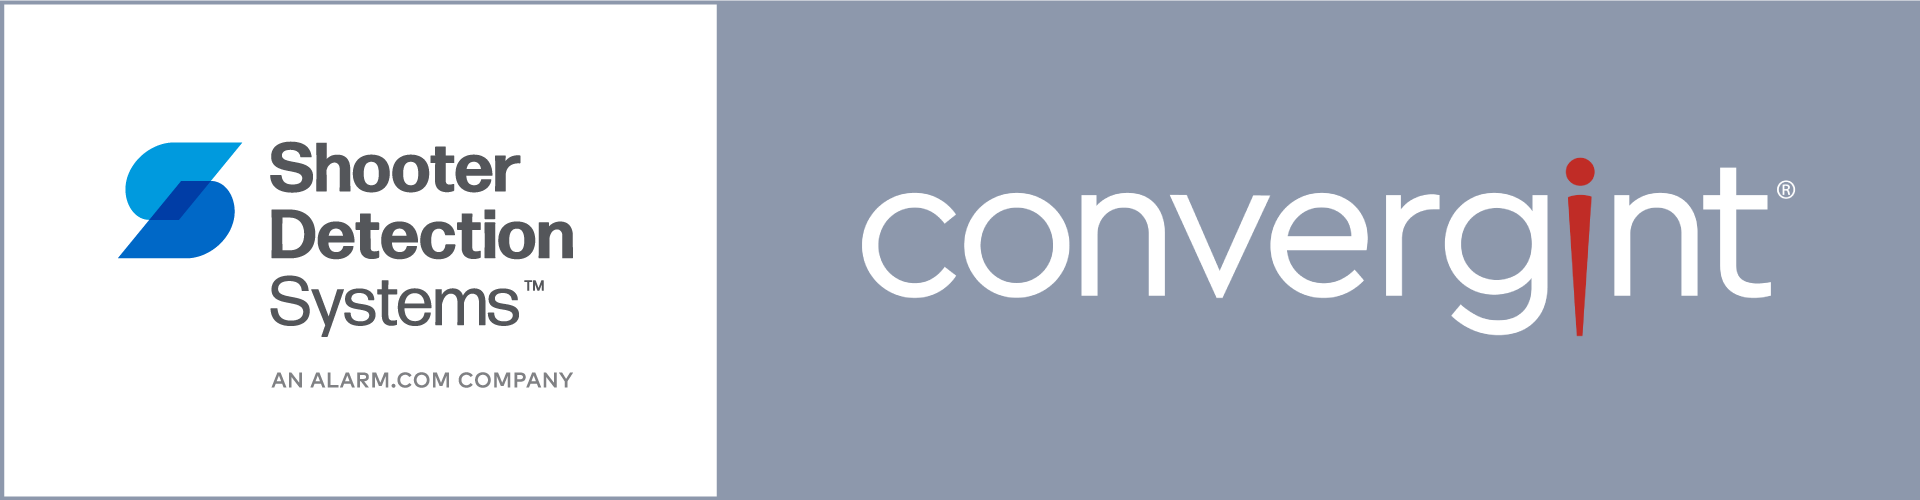 Convergint and SDS cobranded logo